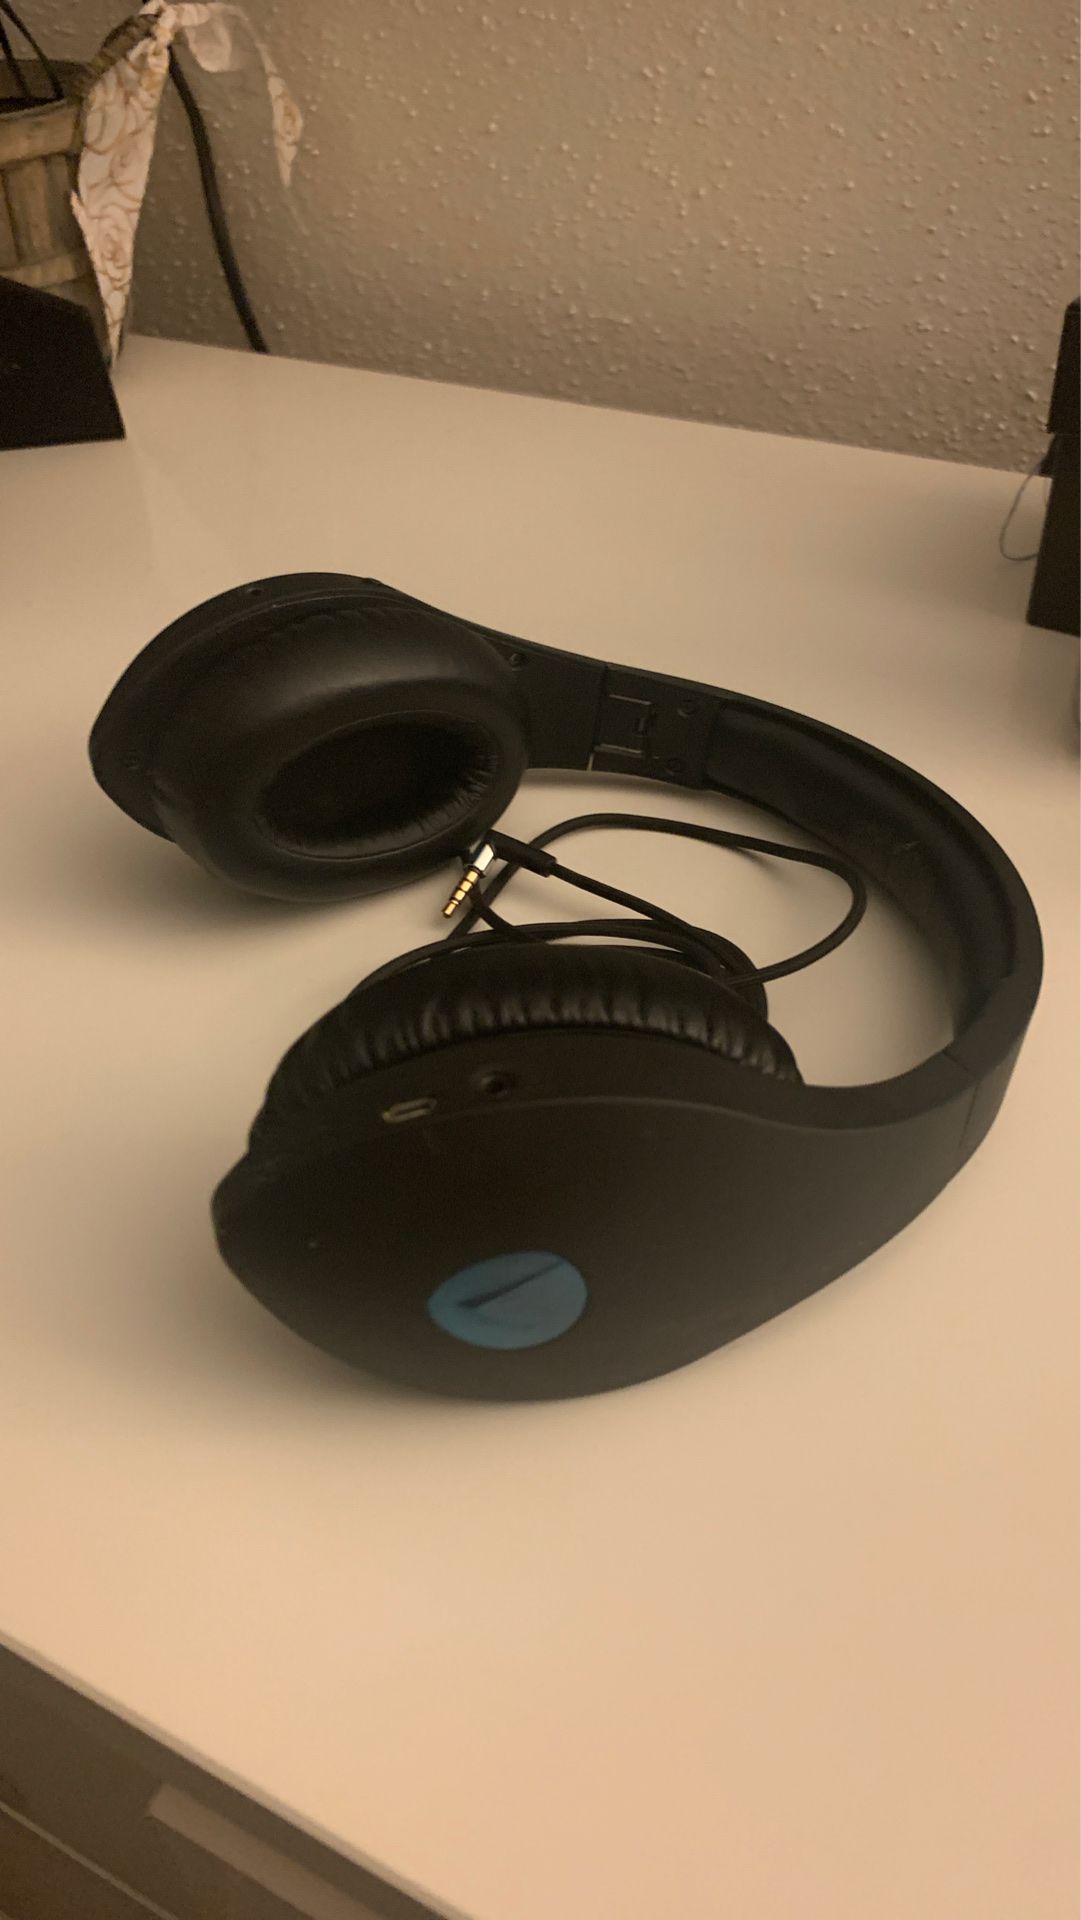 Velodyne's vQuiet Headphones